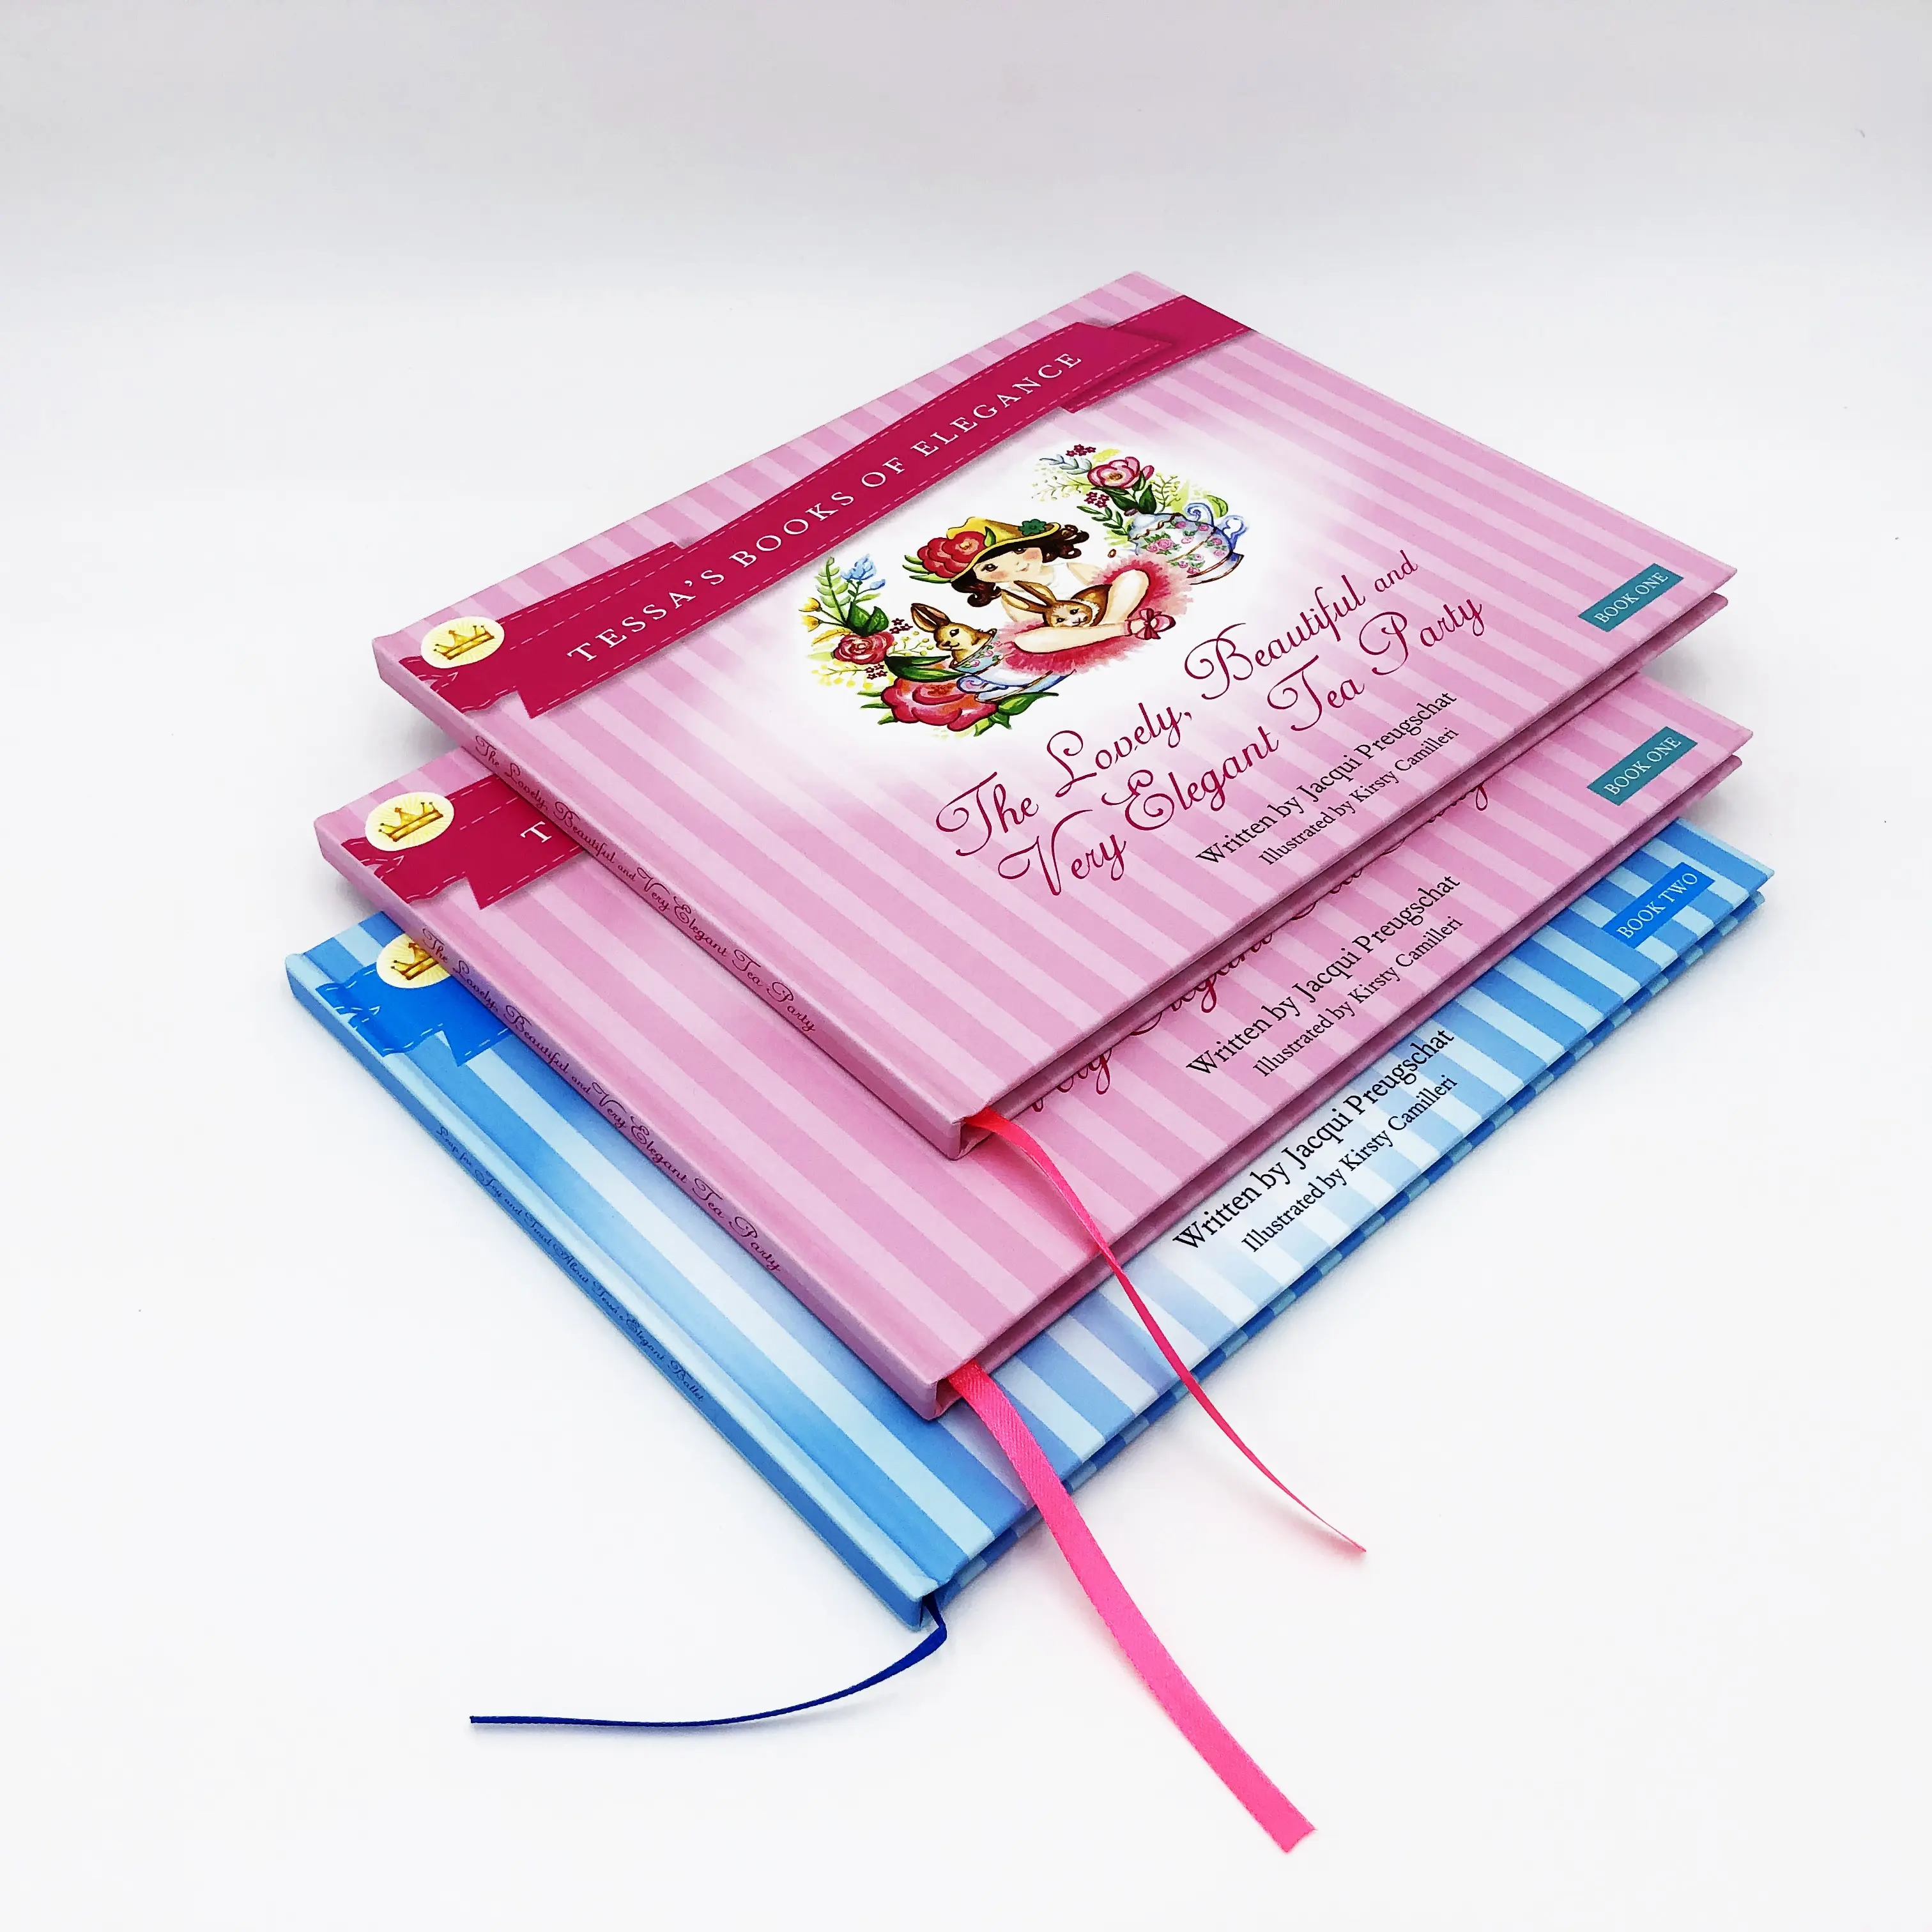 GIGO सबसे अच्छा बेच सुरुचिपूर्ण पैकिंग रंगीन बच्चों गत्ता बाध्यकारी पुस्तक मुद्रण बोर्ड की किताब मुद्रण बोर्ड की किताब